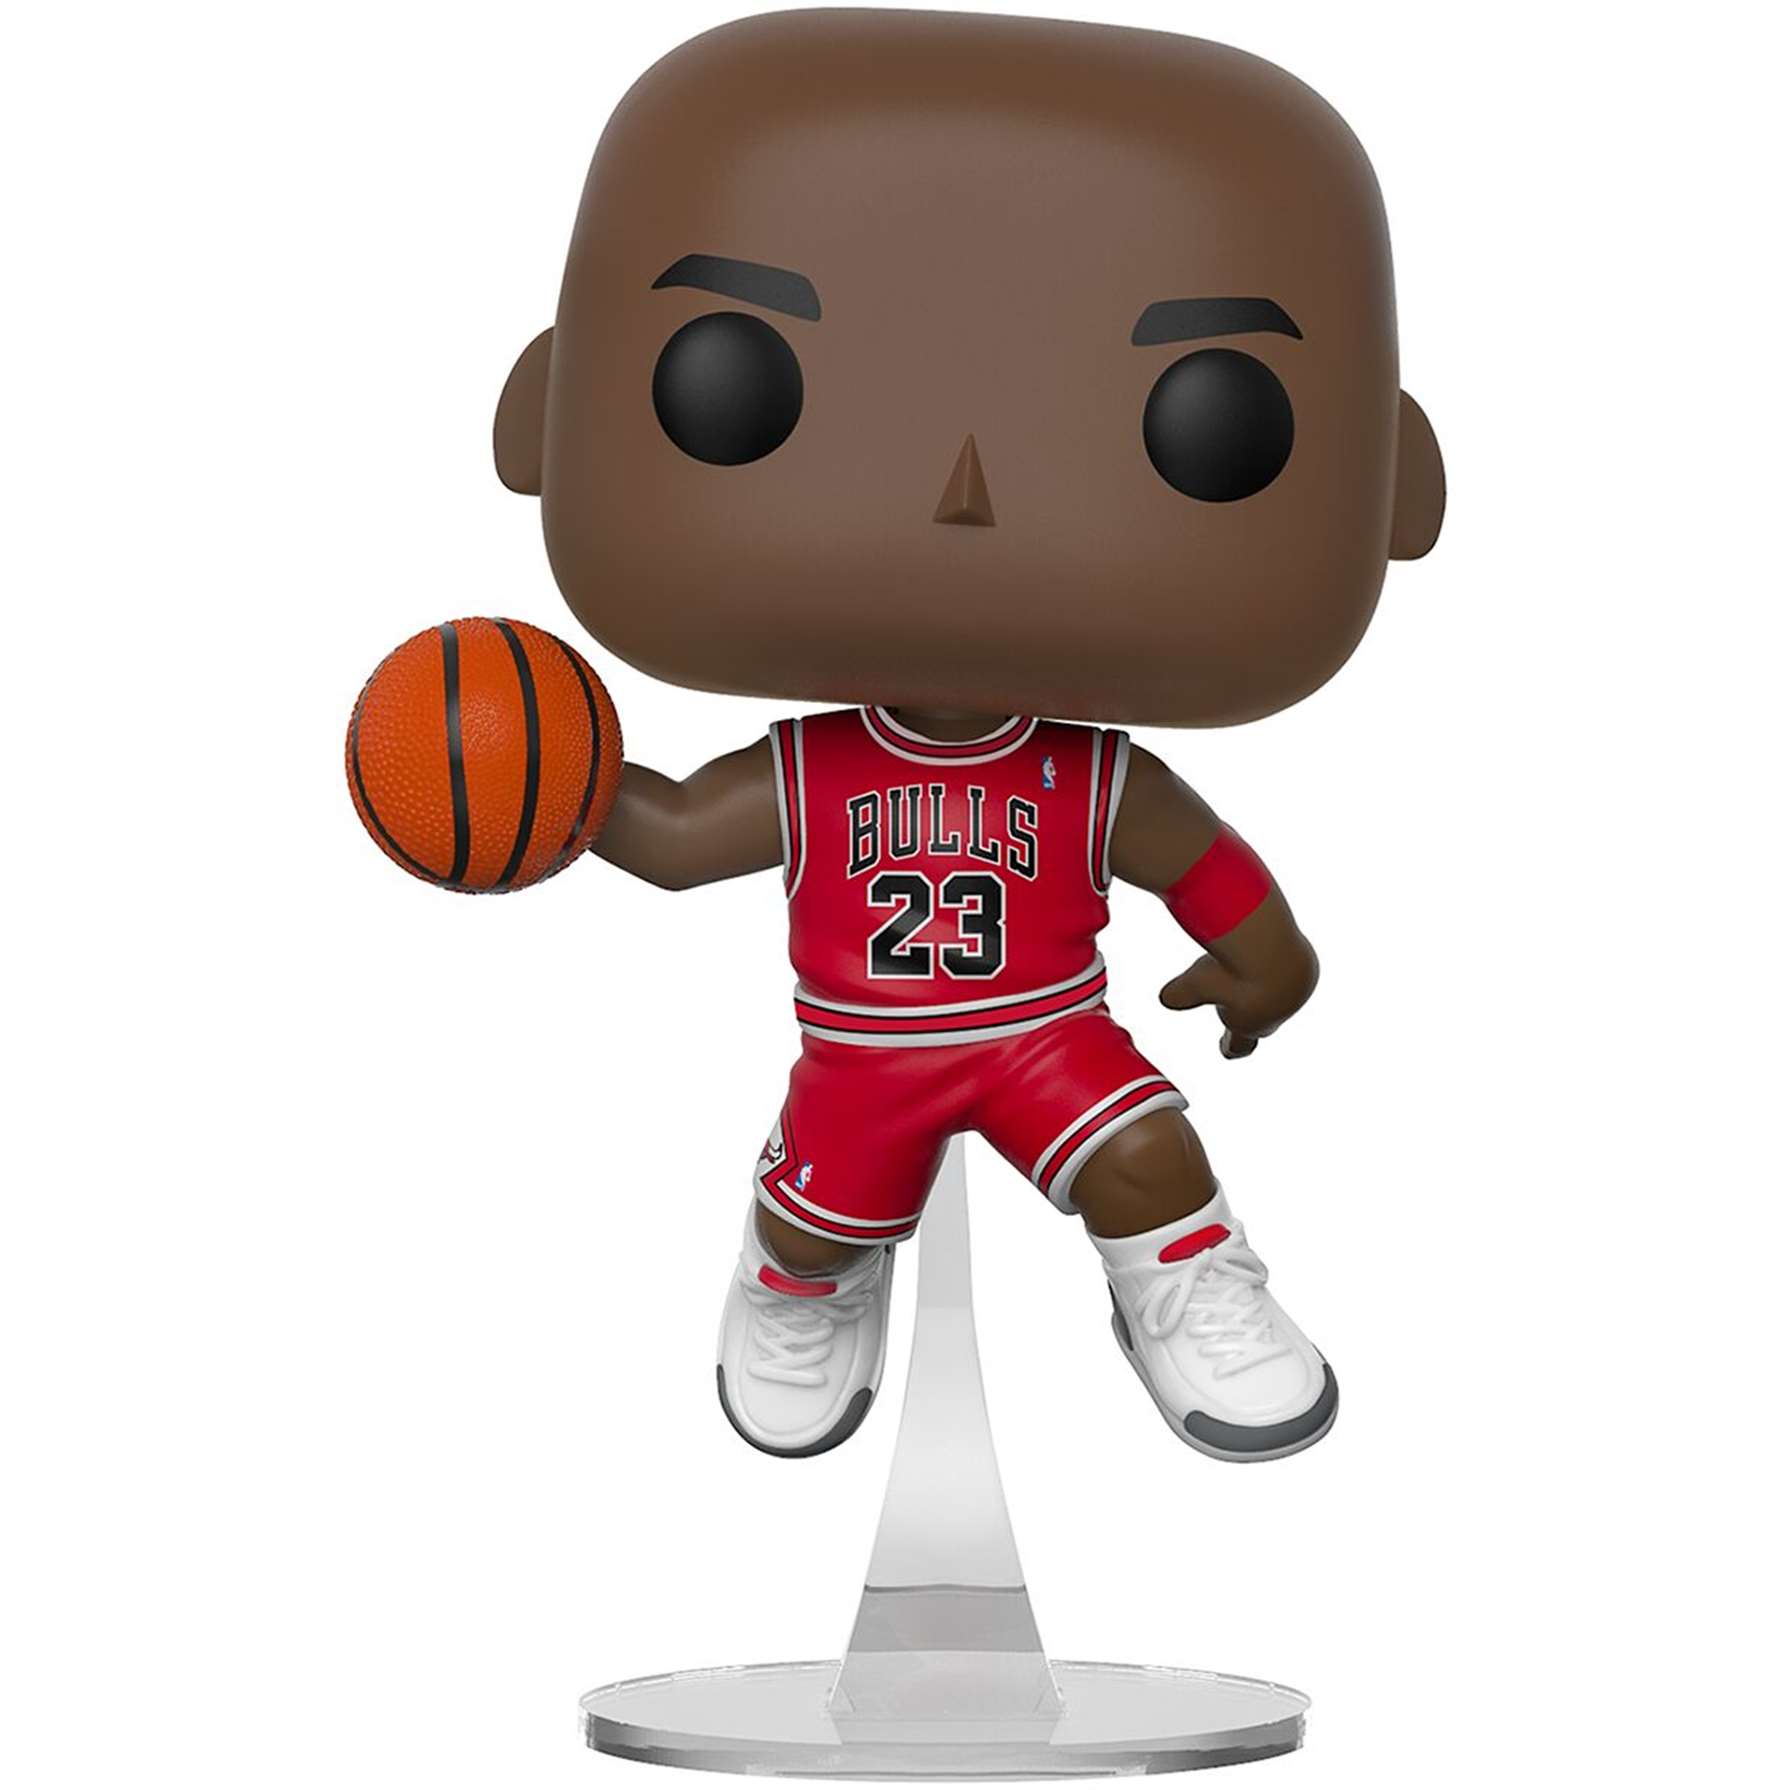 Comprar Funko NBA Figura Michael Jordan | Toy Planet